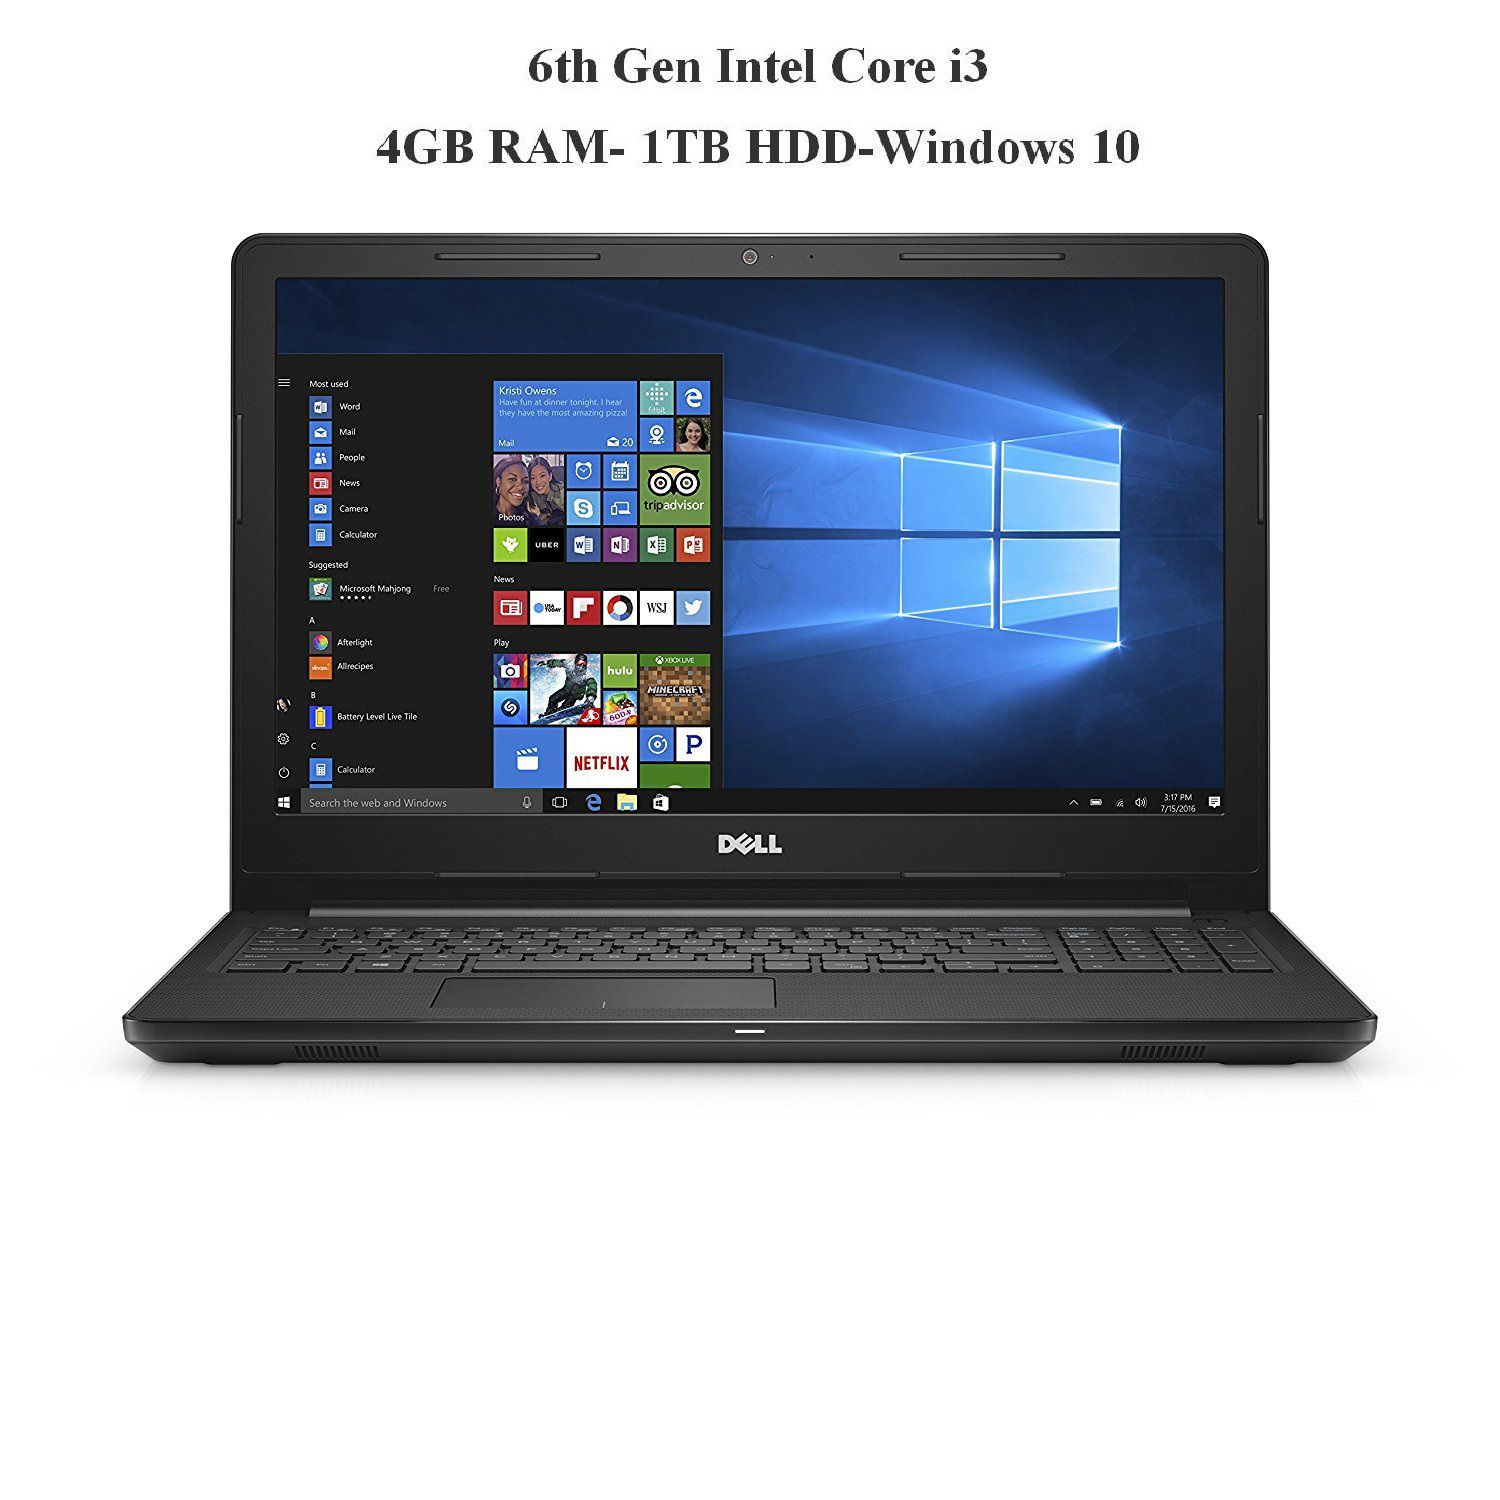 Dell Inspiron 3567 Notebook (6th Gen Intel Core i3 4GB RAM 1TB HDD 39.62cm(15.6) Windows 10